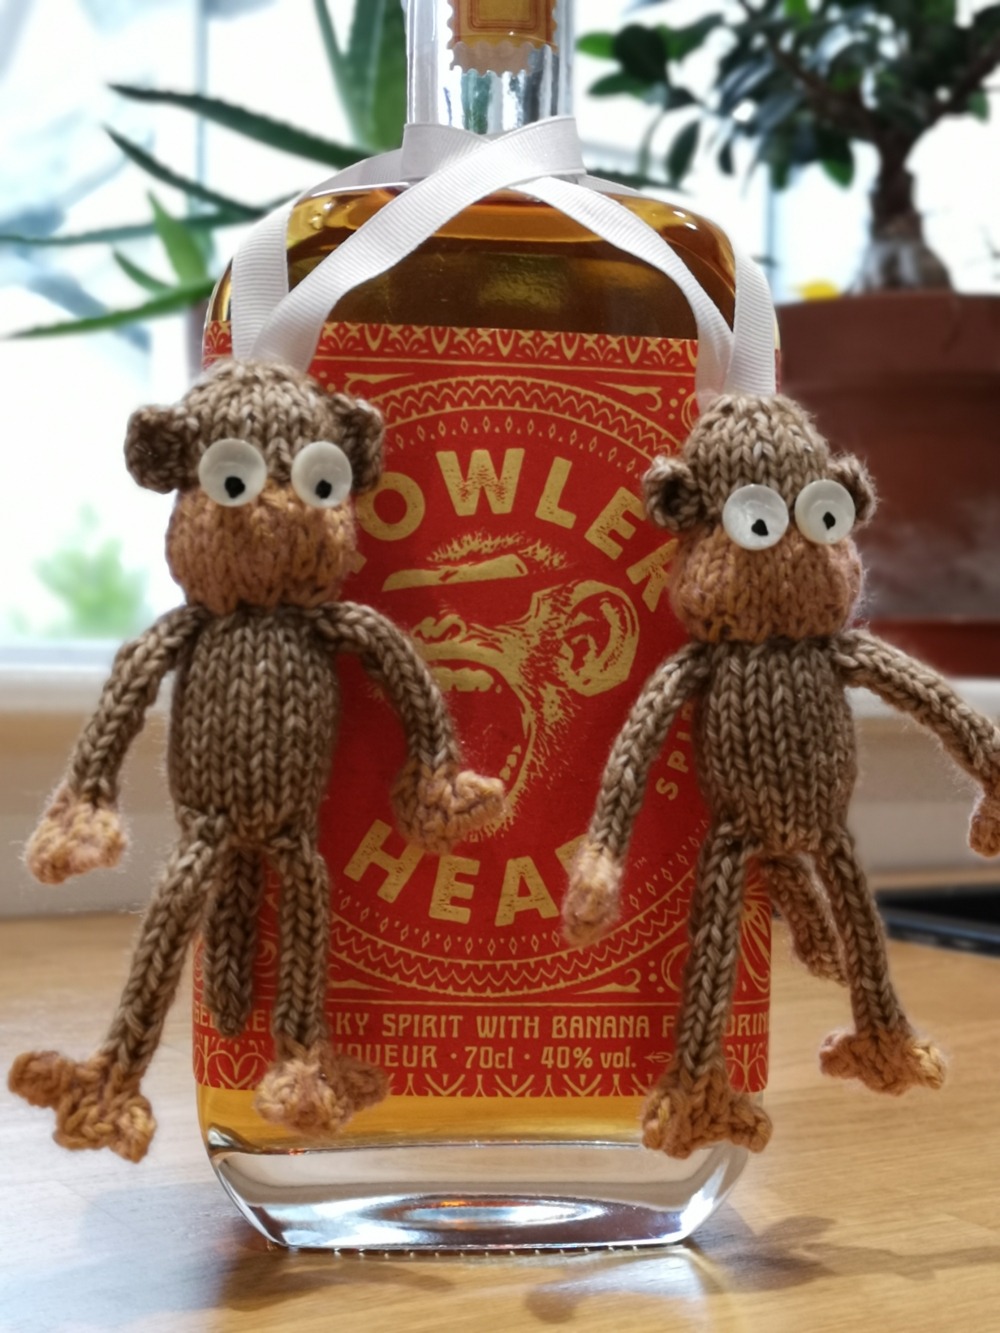 Pair of knitted monkeys